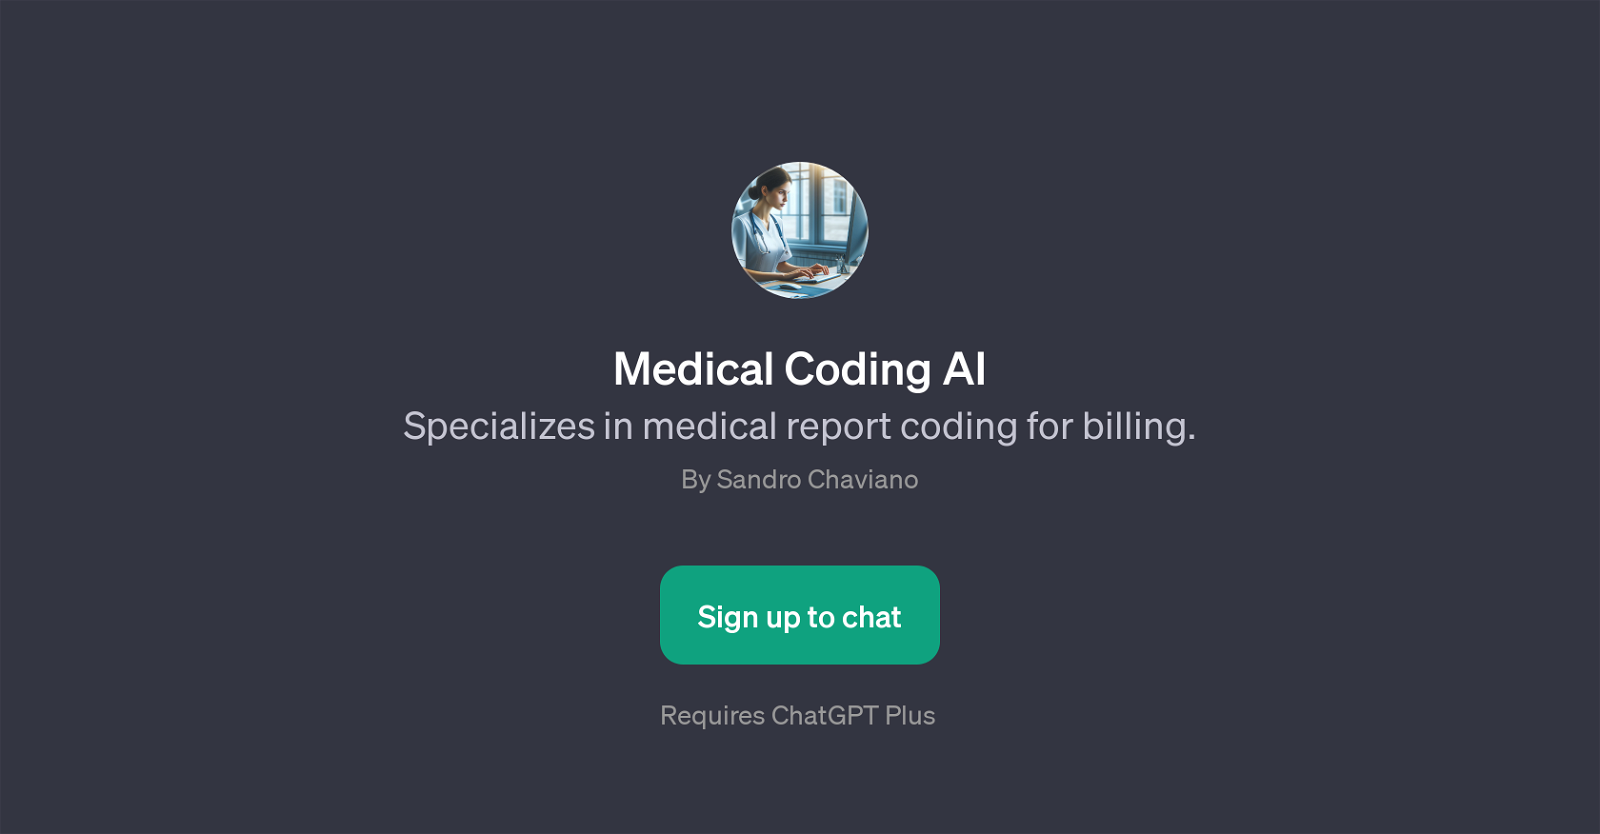 Medical Coding AI website